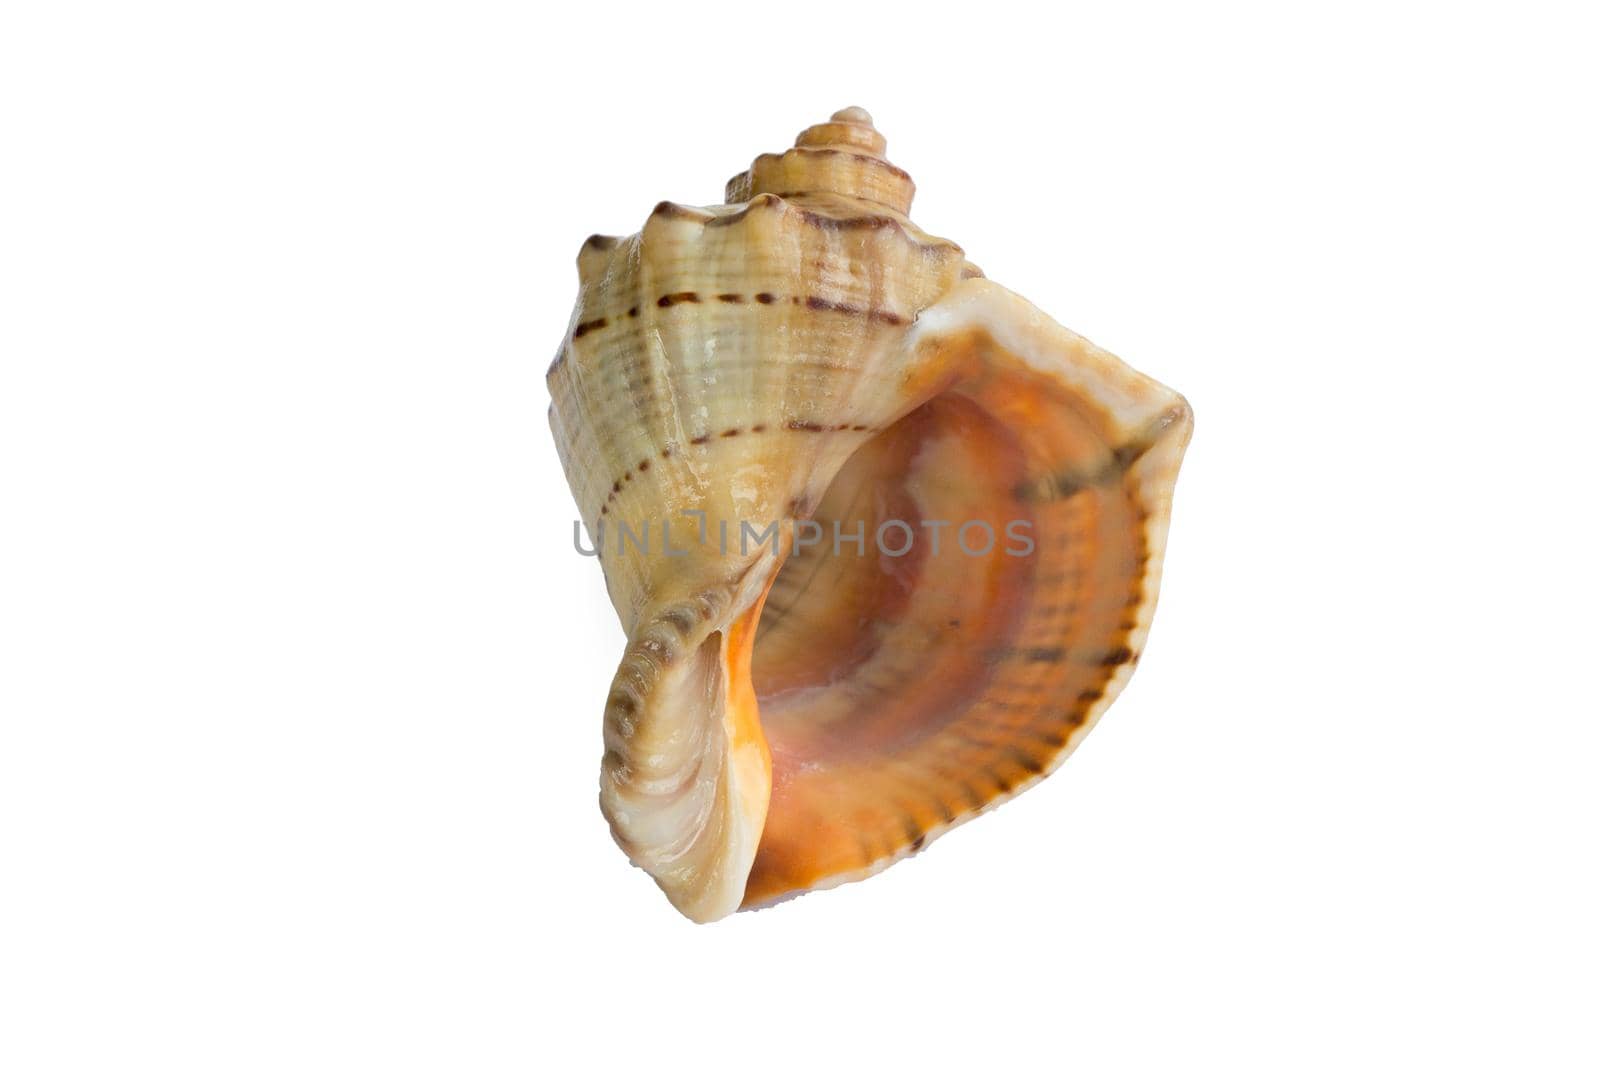 Big light yellow orange gastropod seashell close-up on white background by VeraVerano